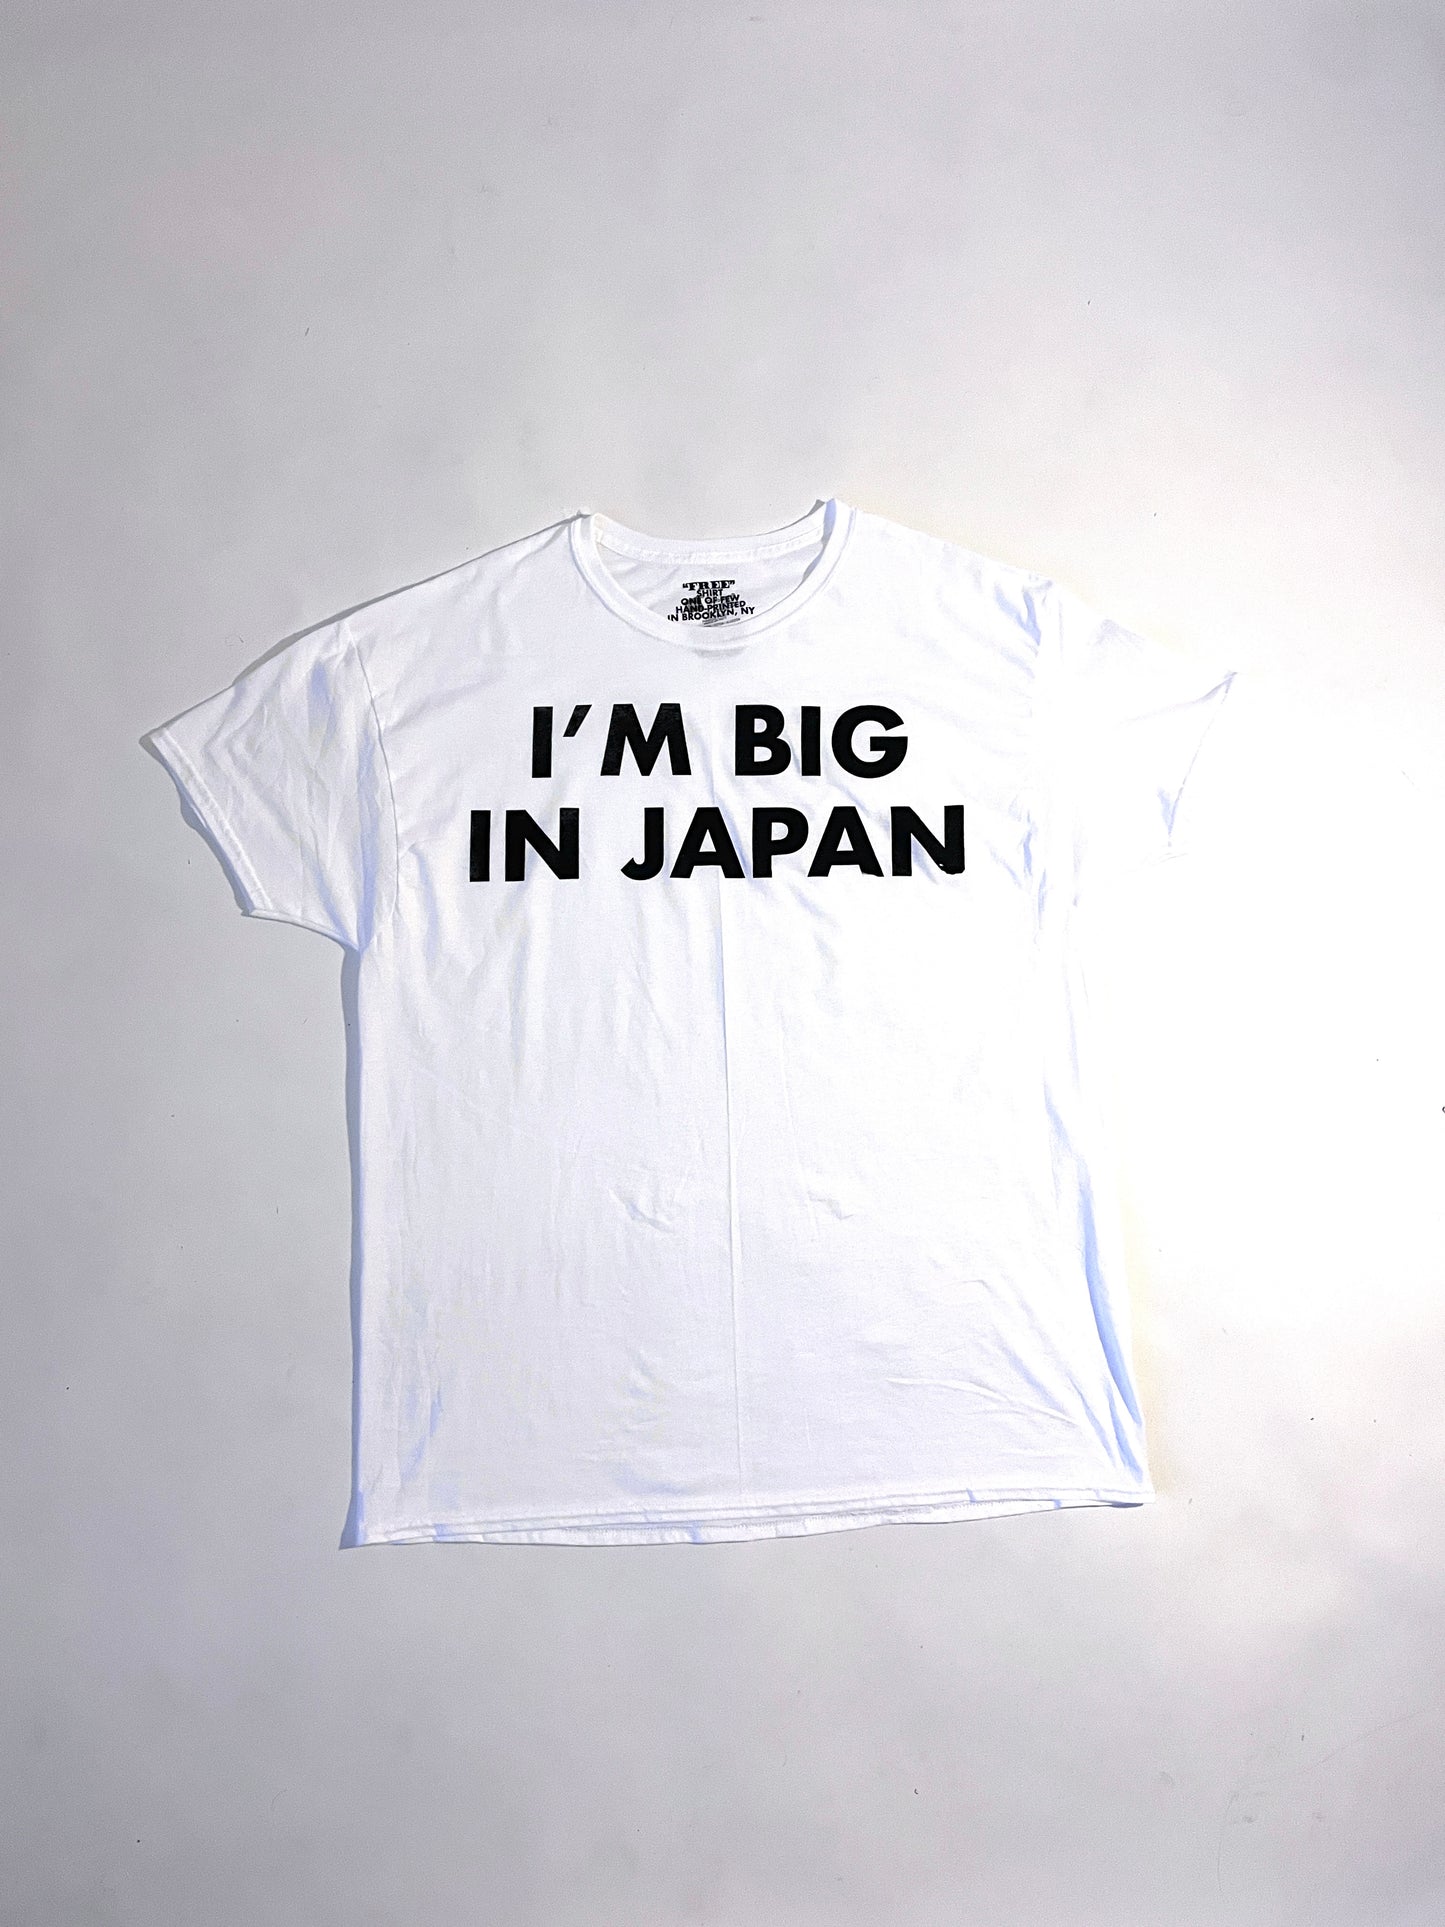 I'M BIG IN JAPAN